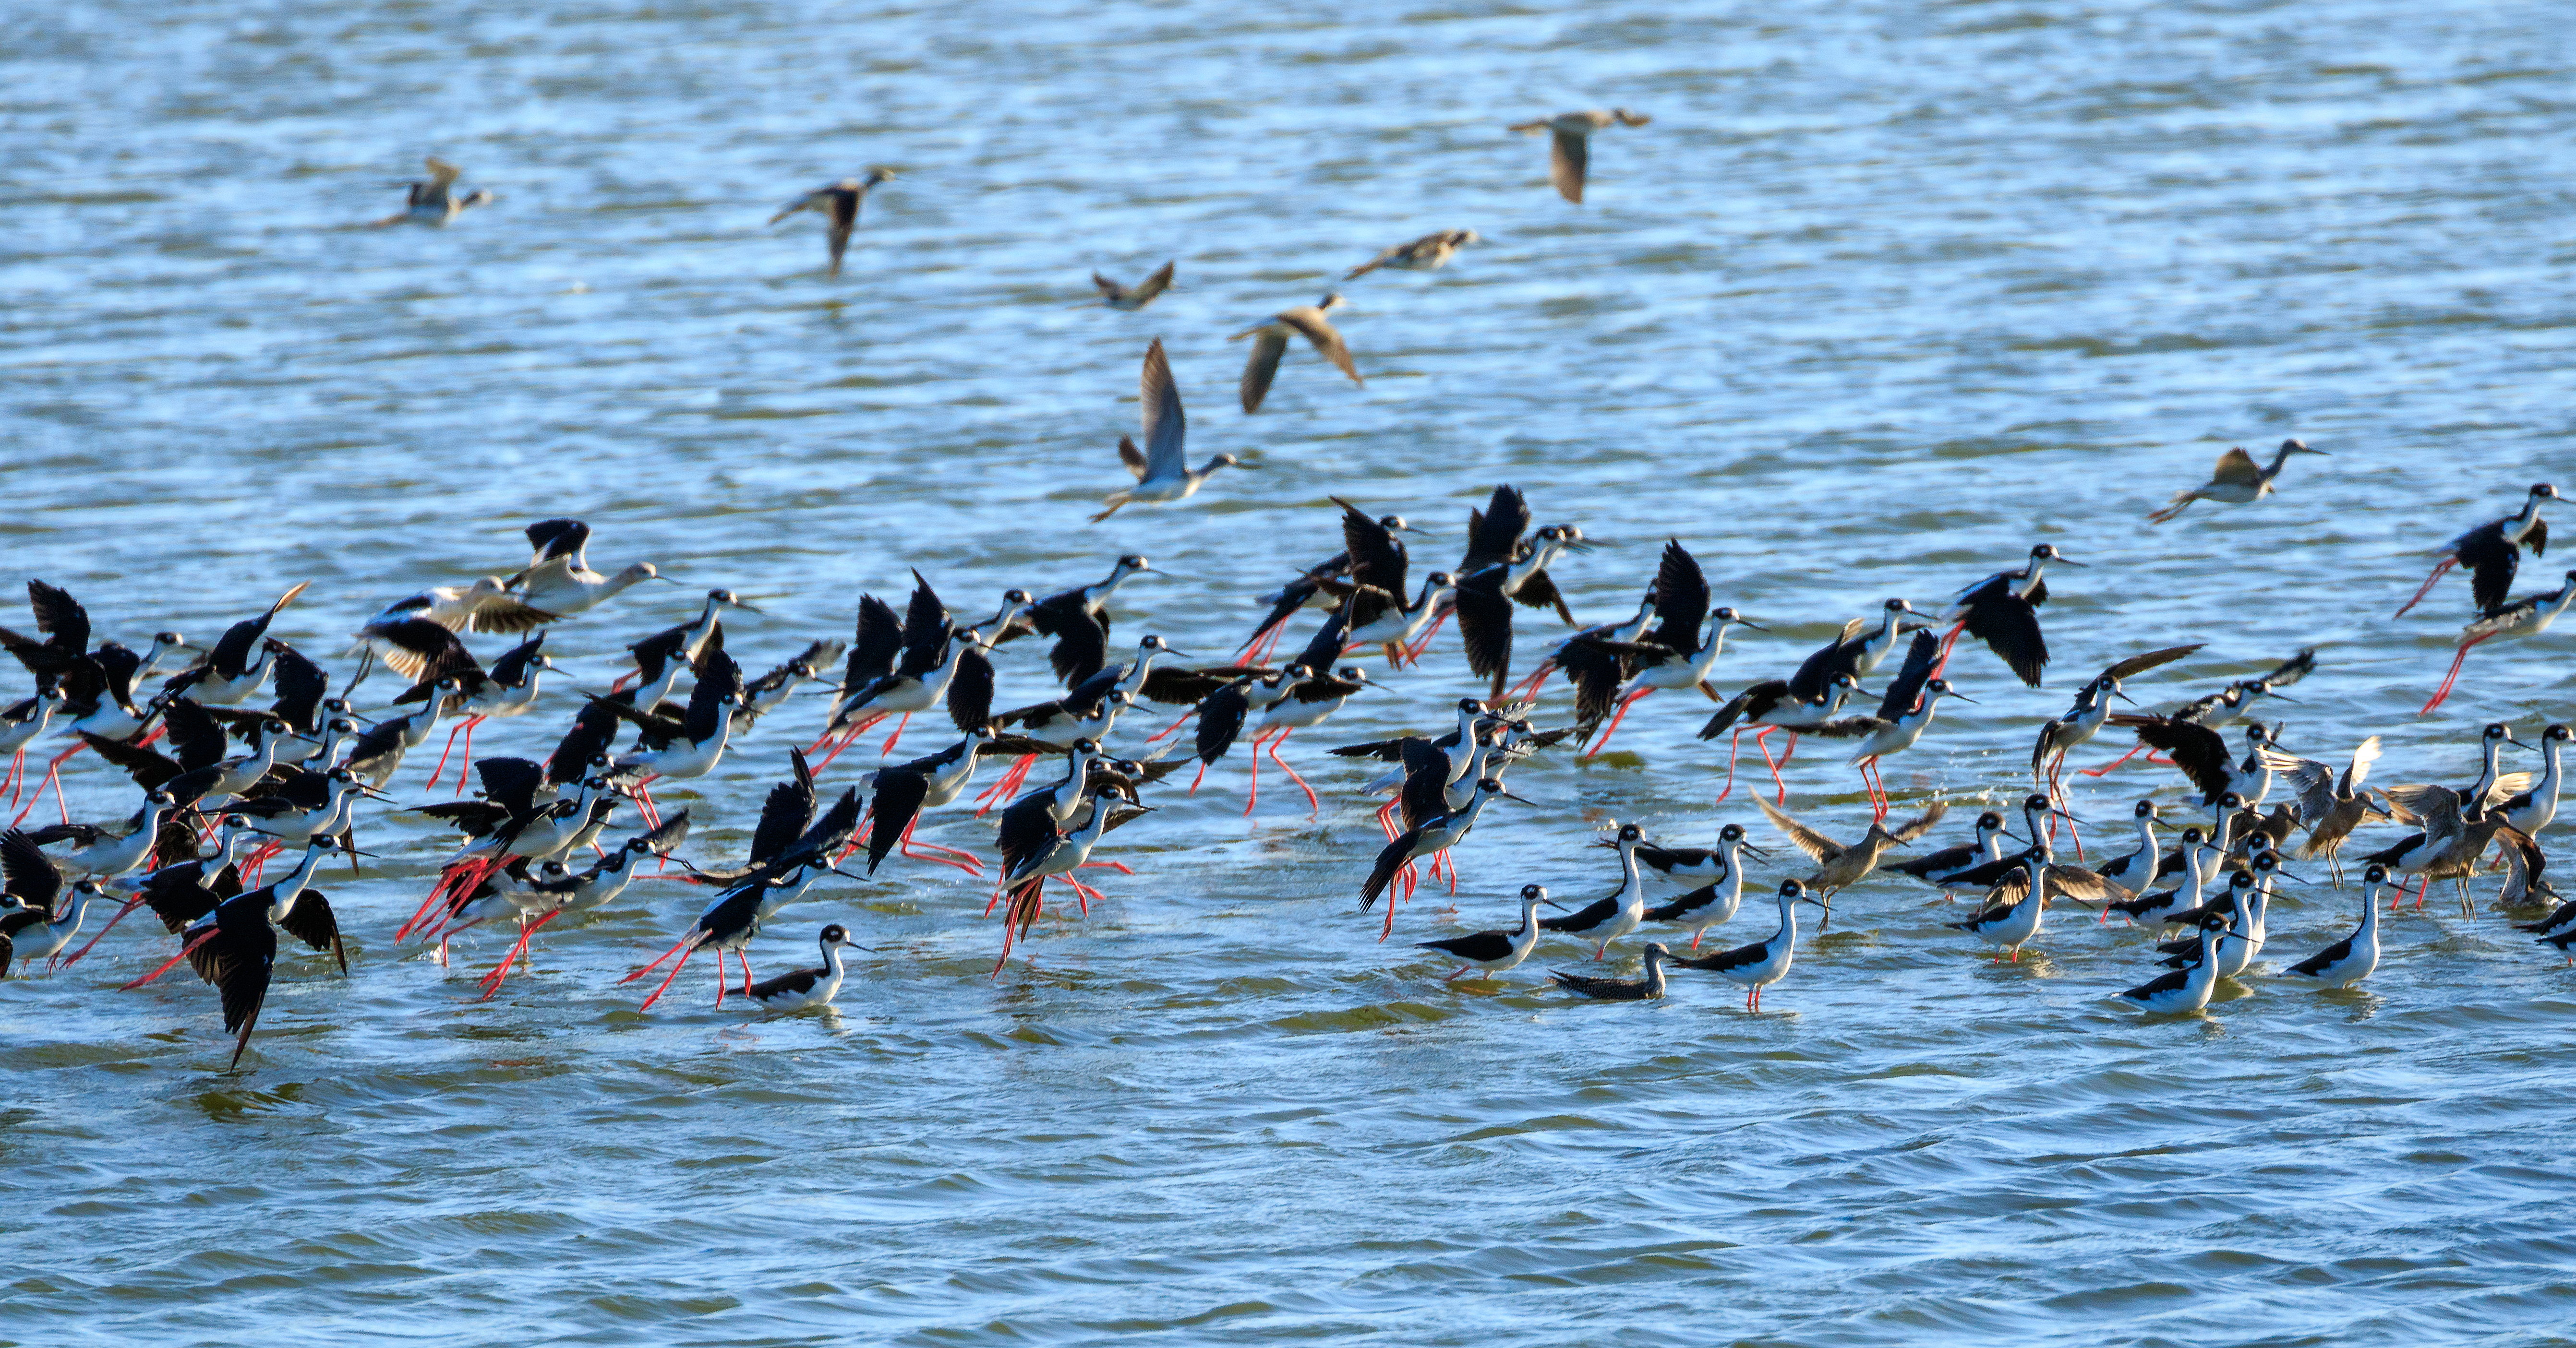 Black-necked stilts in flight landing in shallow water. 